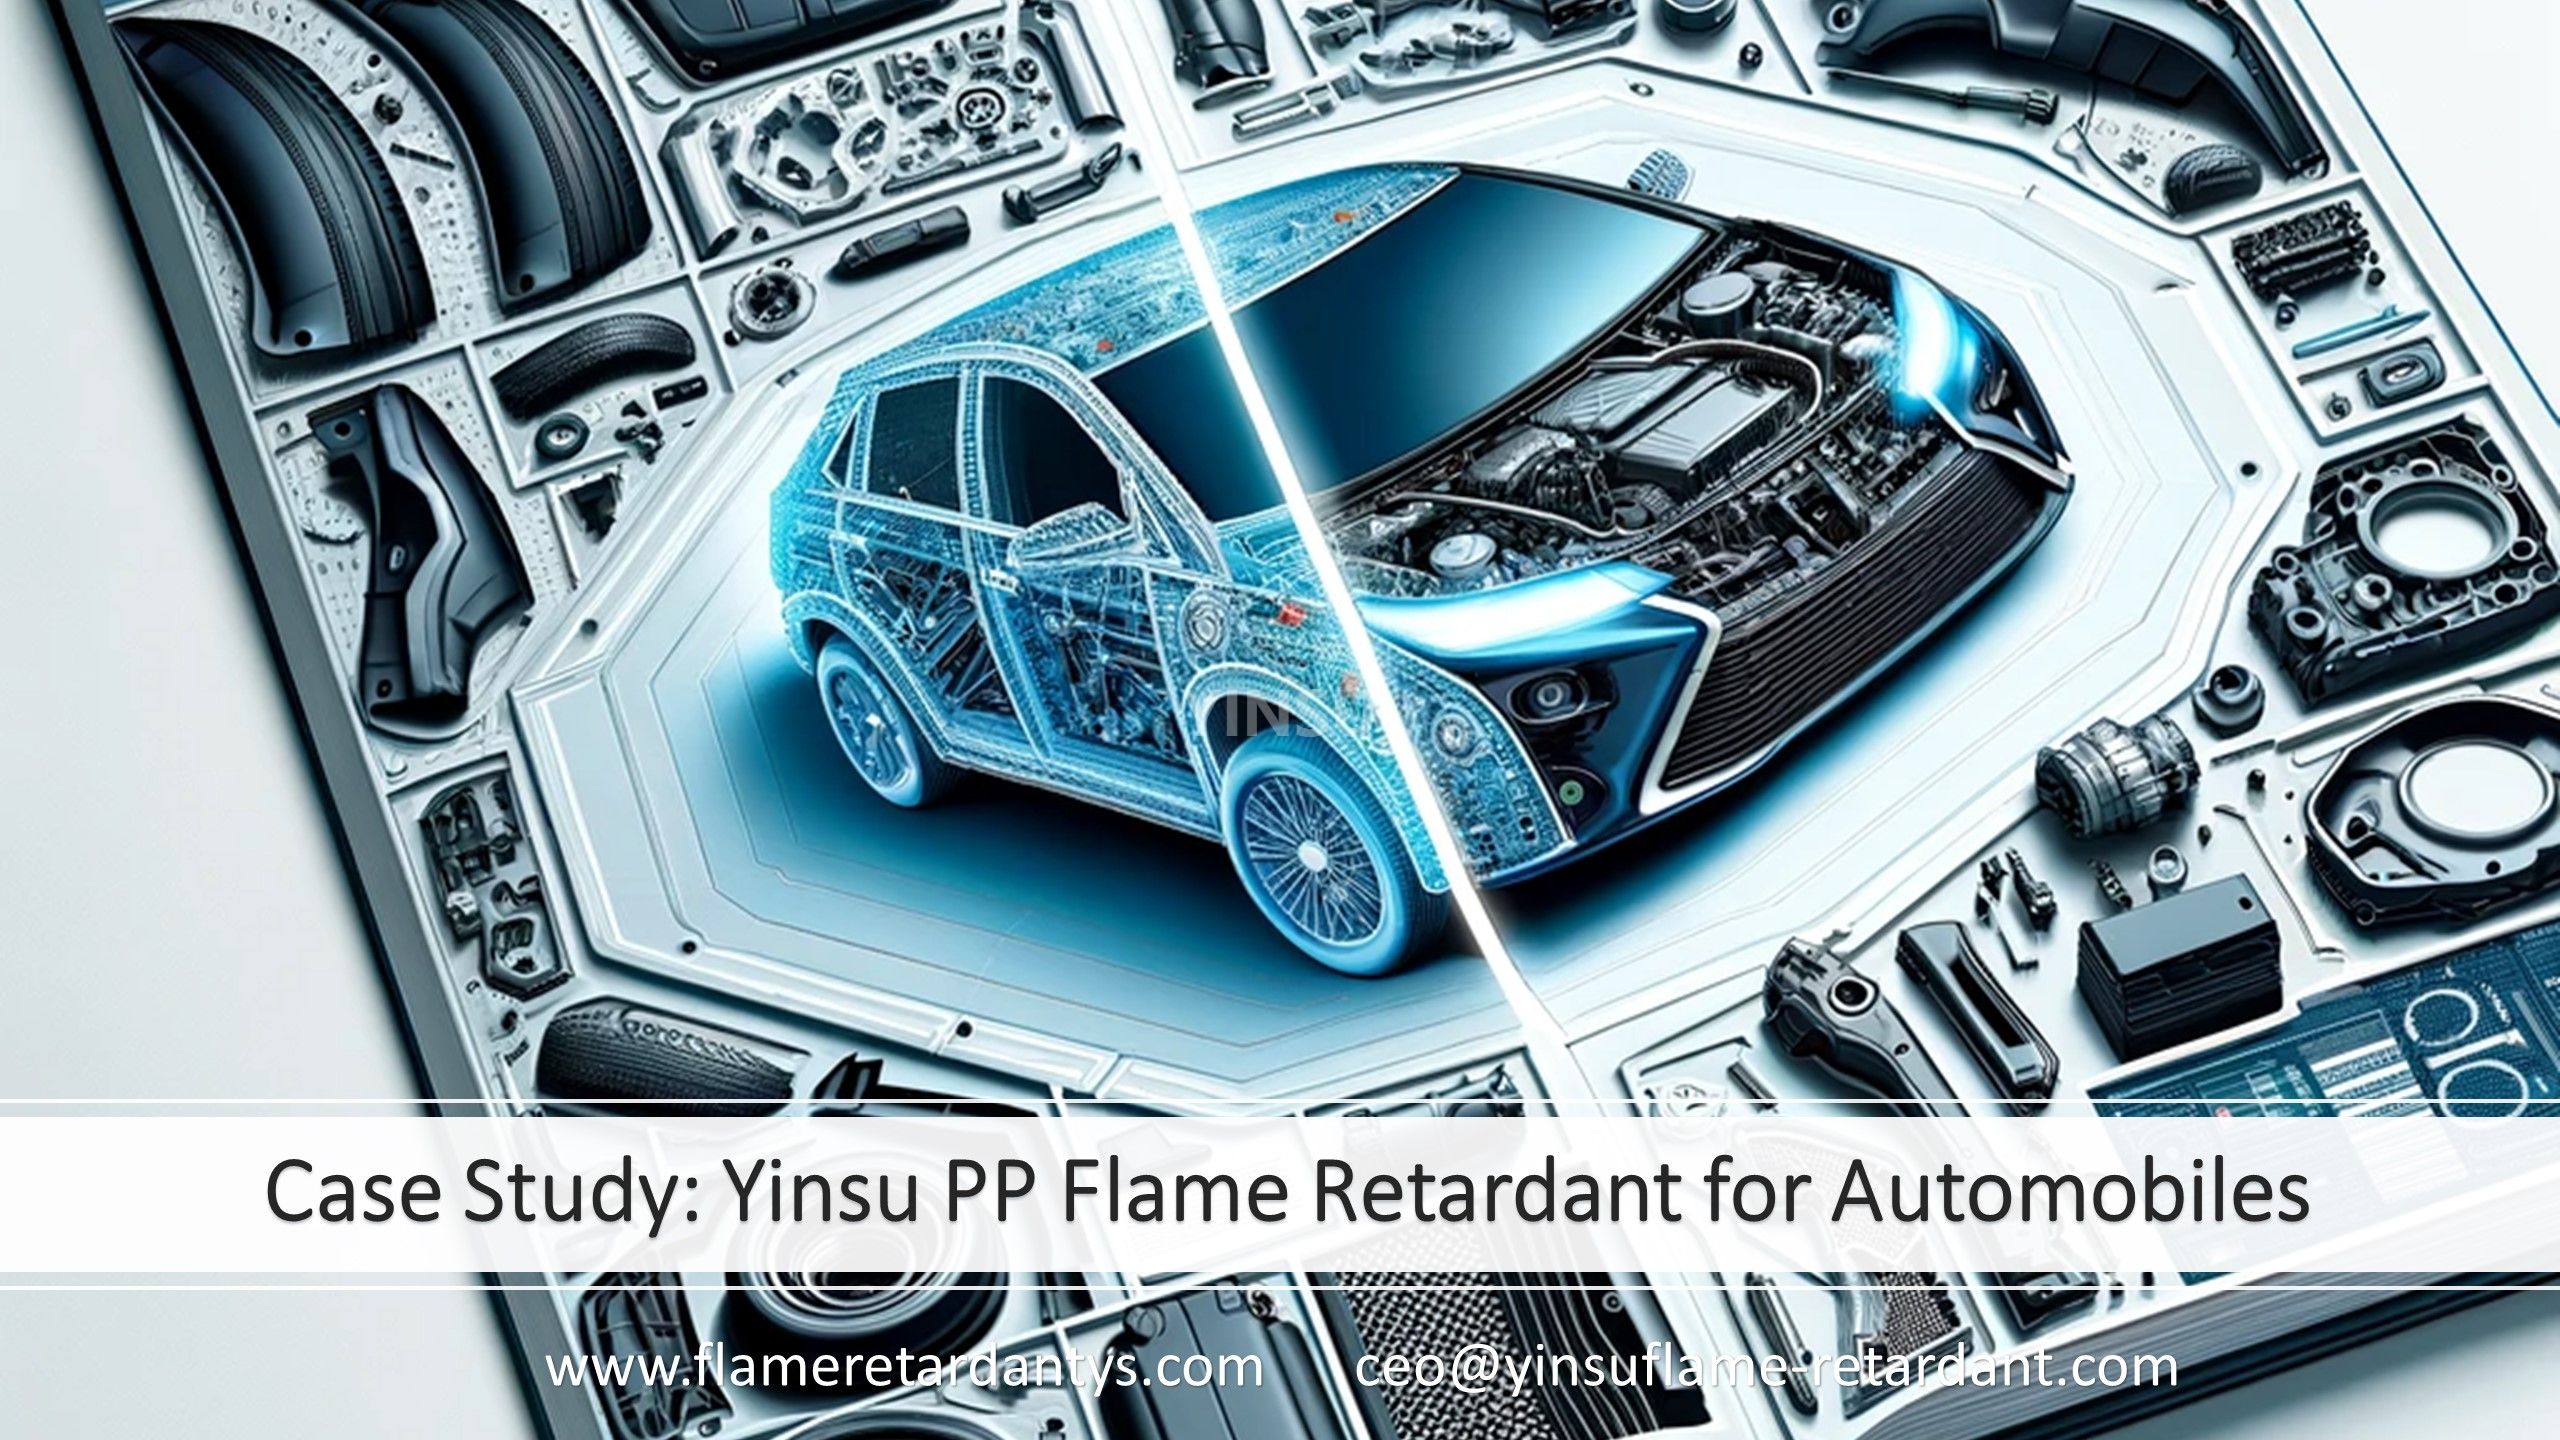 Case Study: Yinsu PP Flame Retardant for Automobiles